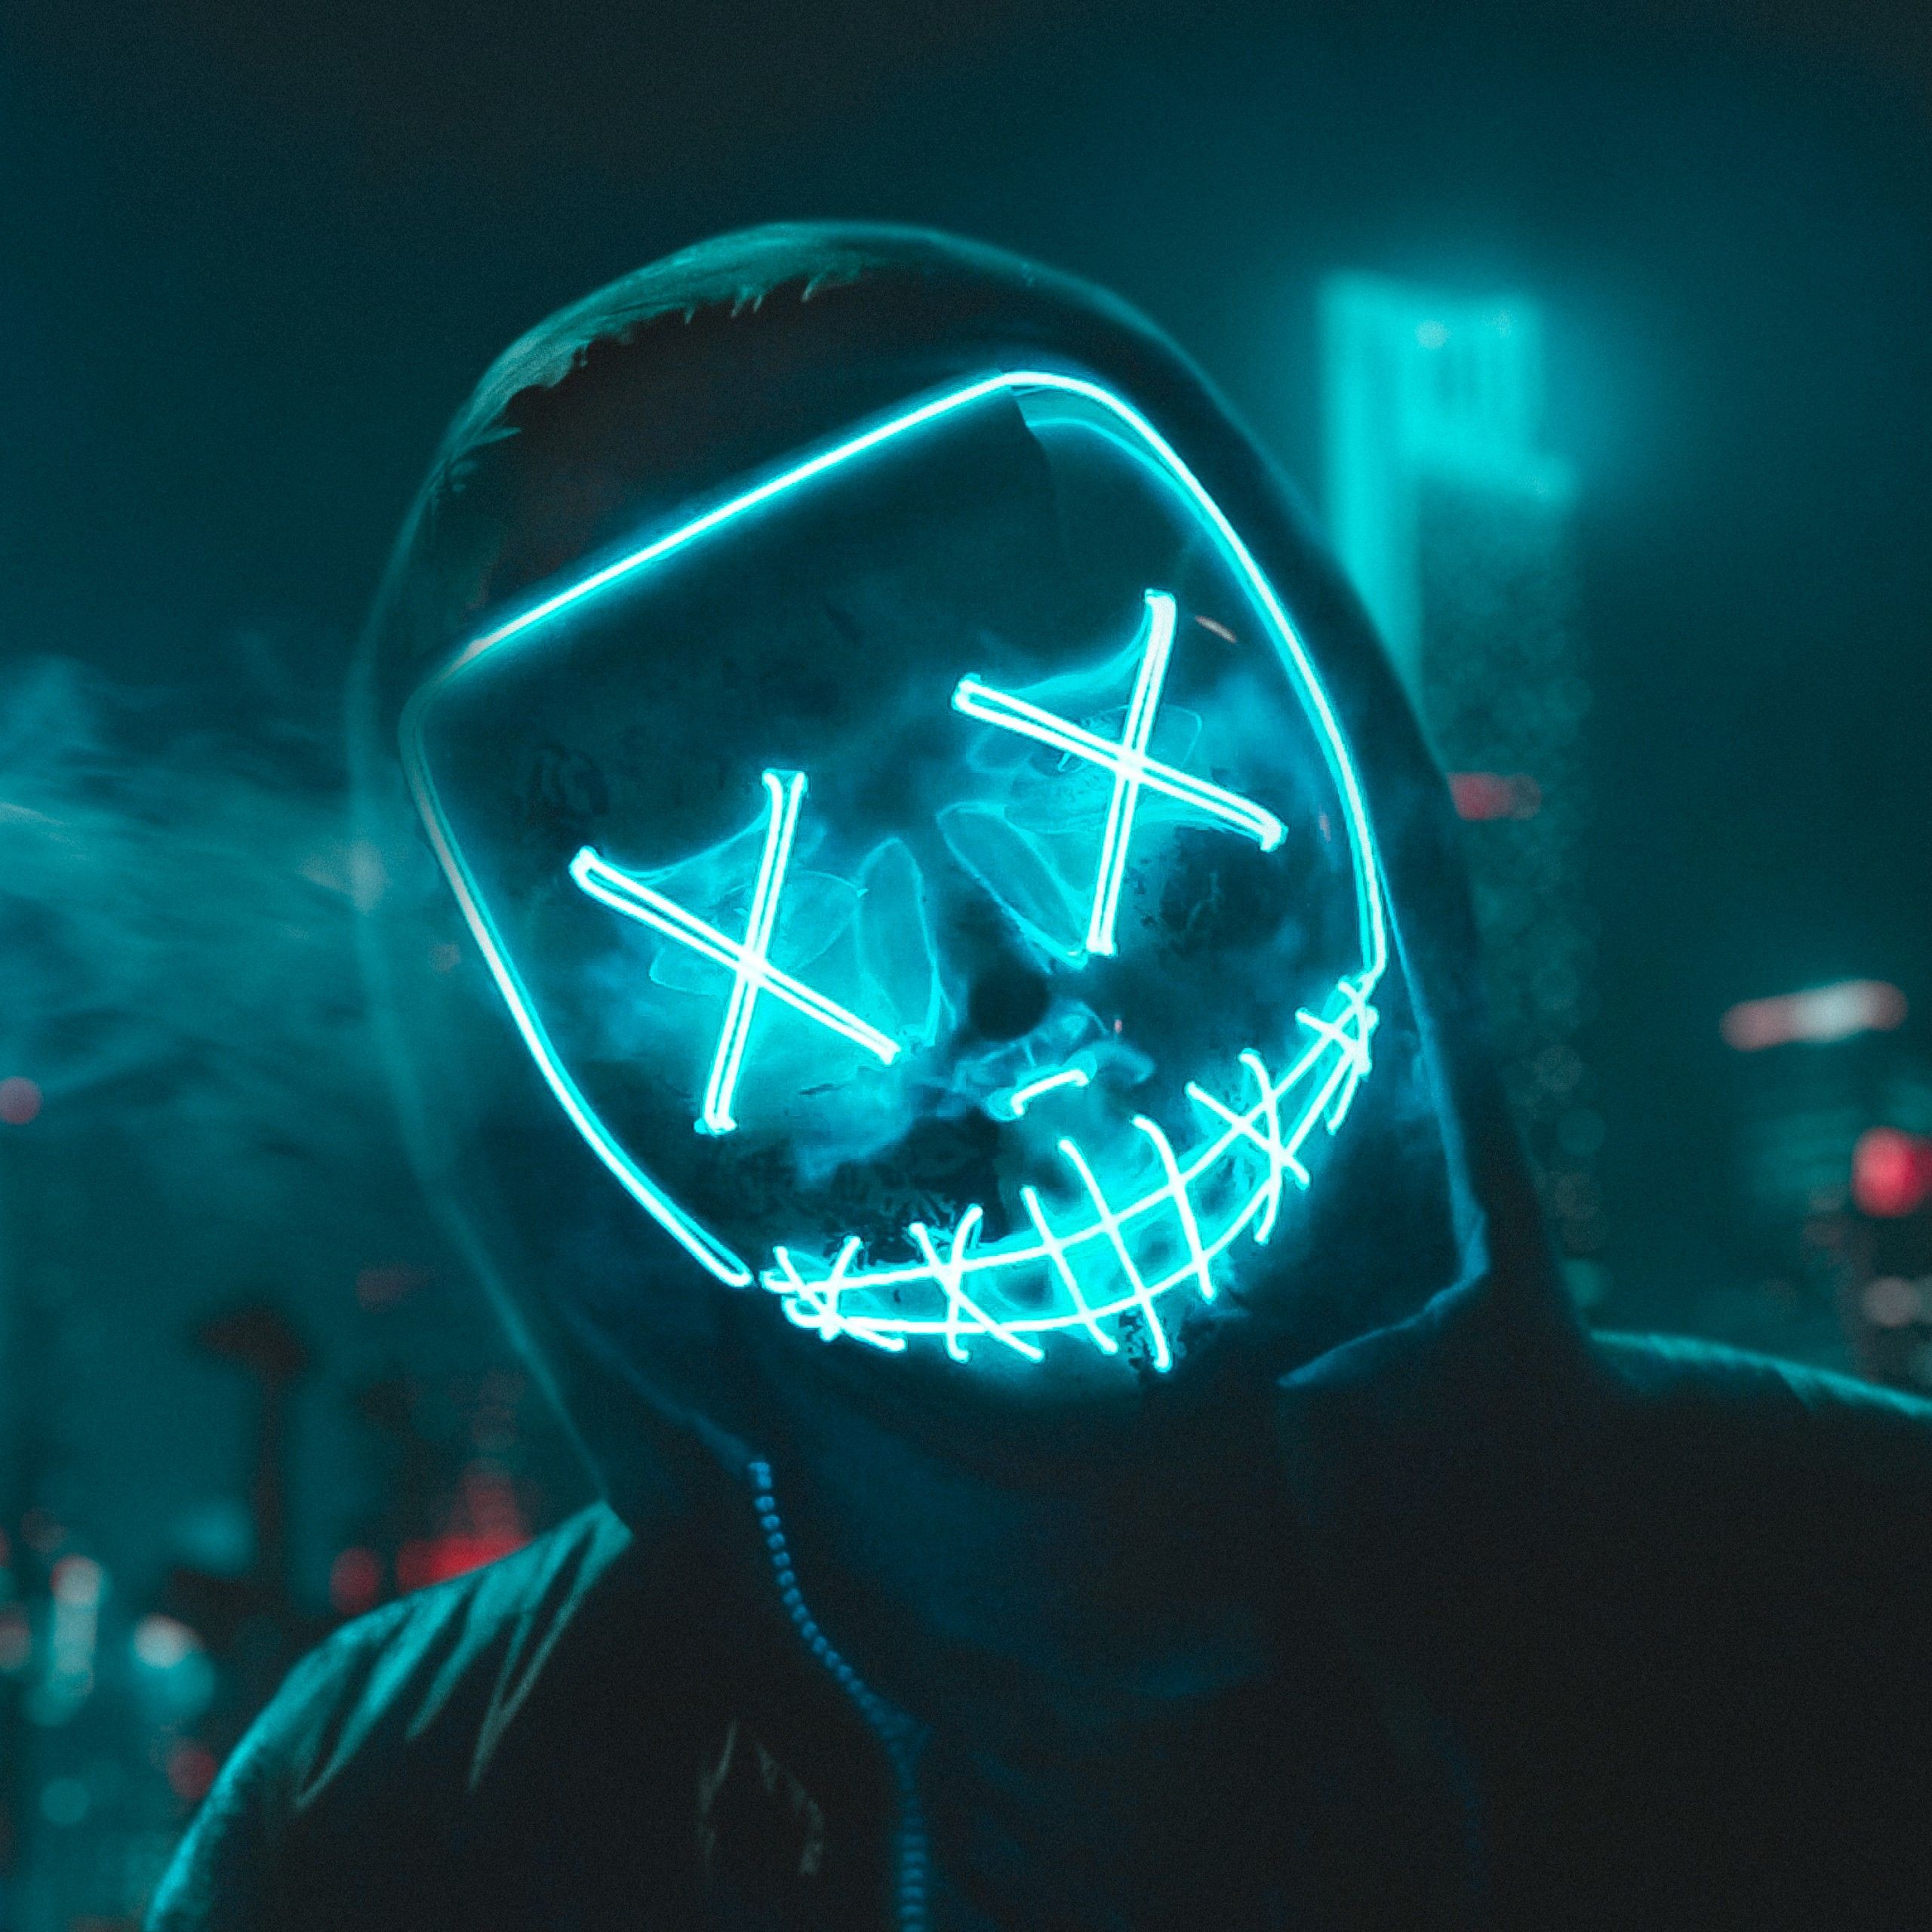 LED mask 4K Wallpaper, Neon, Urban, Photography